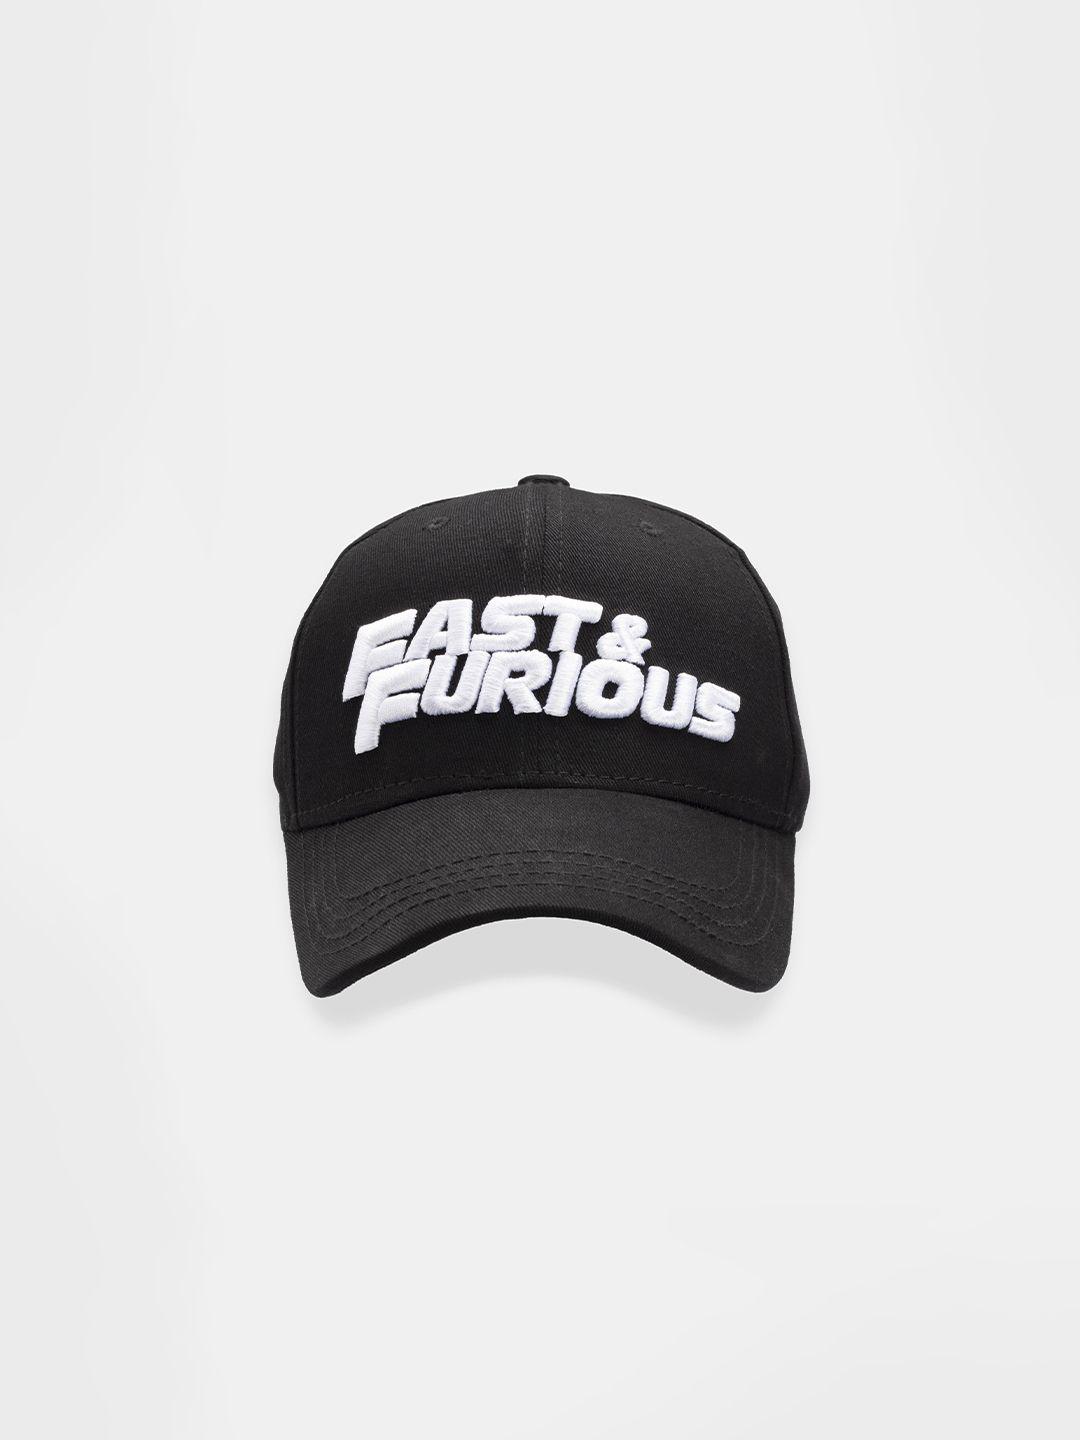 status quo men black & white embroidered baseball cap